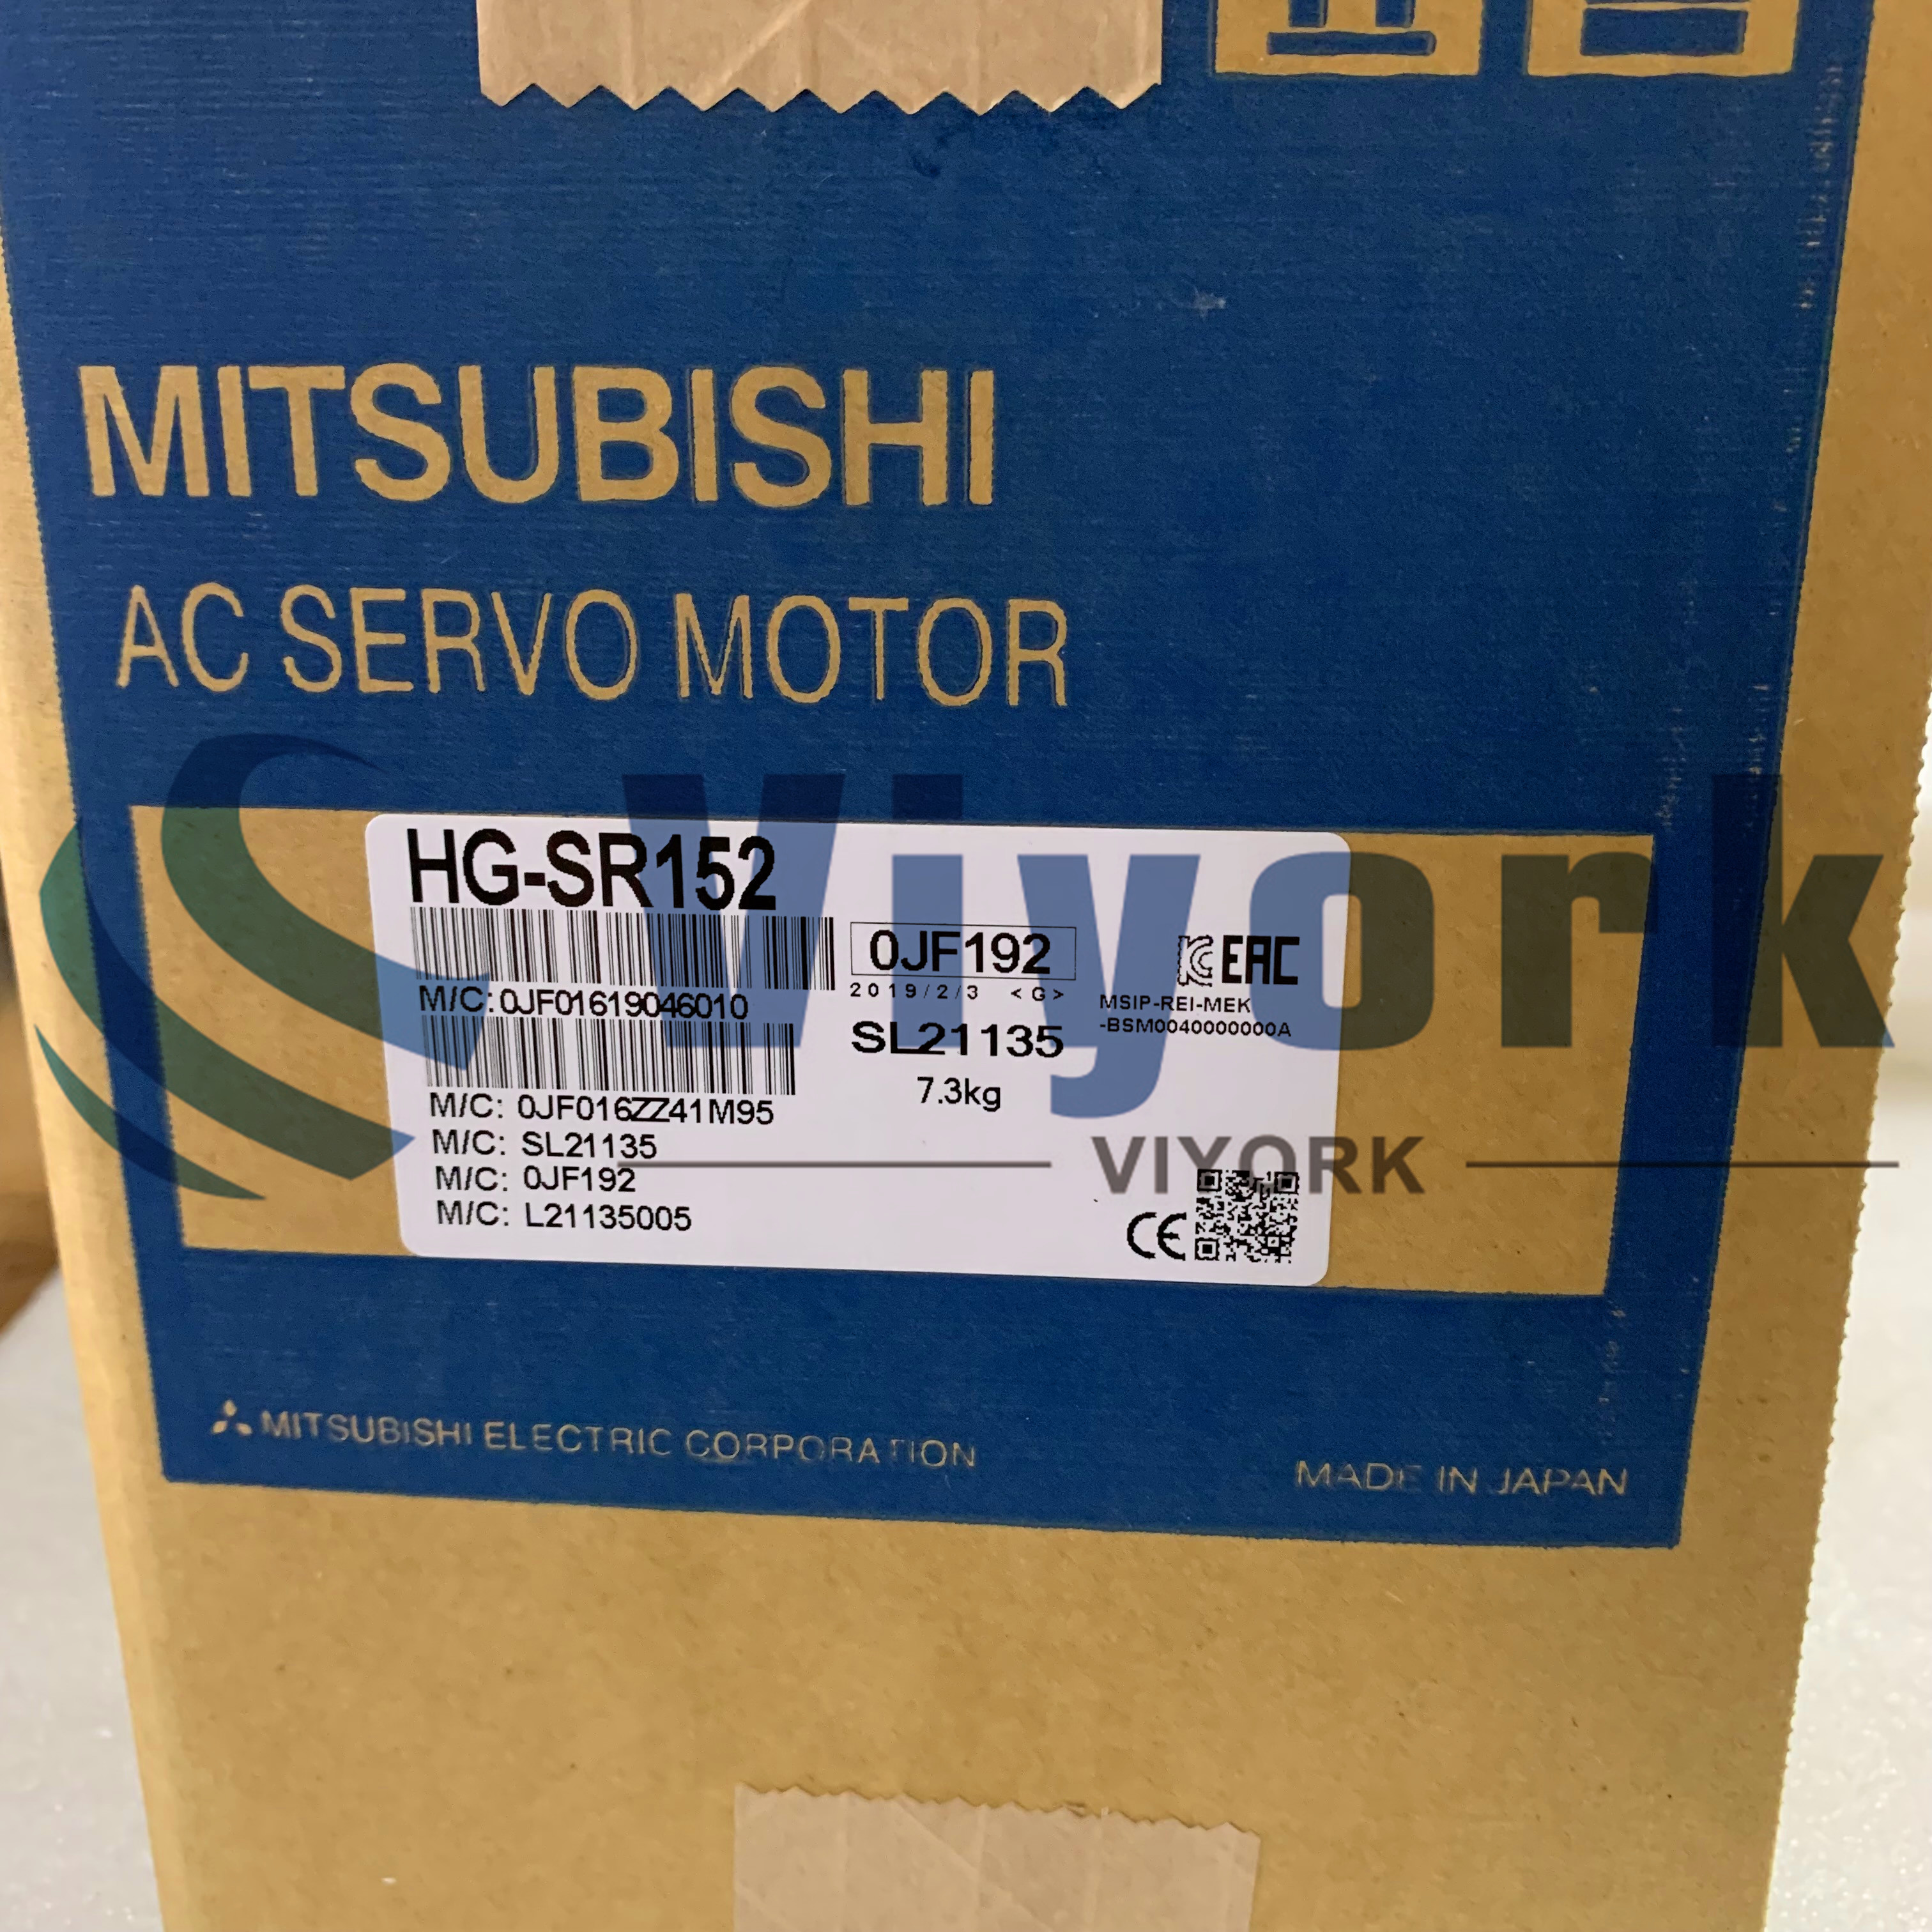 Mitsubishi HG-SR152 AC SERVO MOTOR 1.5KW 7.2NM 200VAC 9.4AM BRAKE 2000RPM NEW